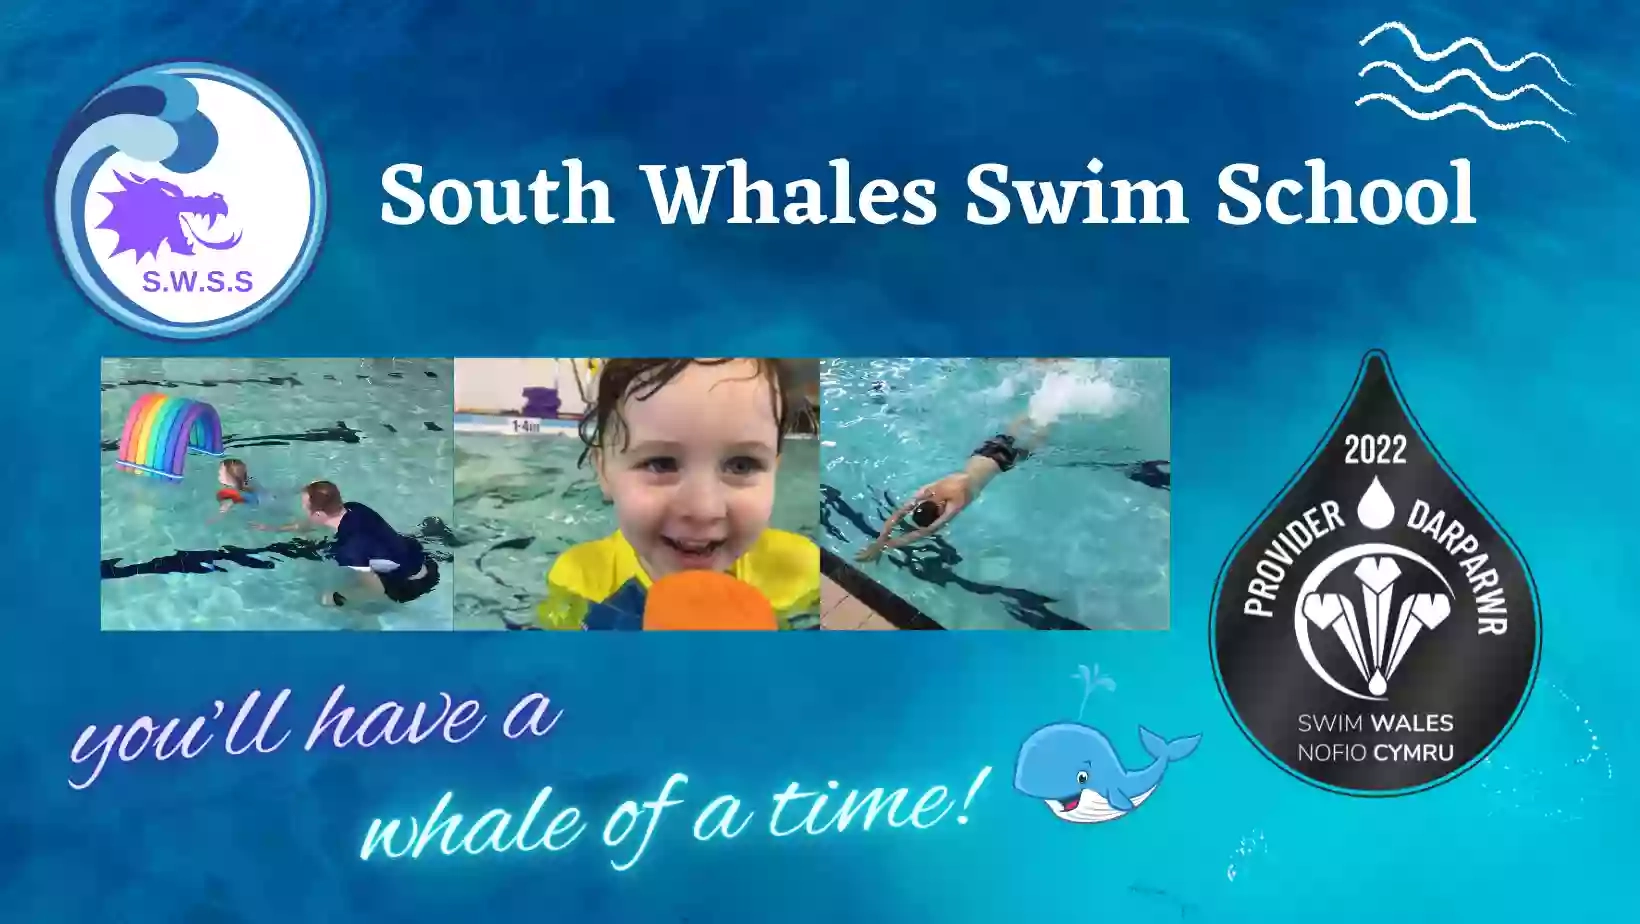 South Wales Swim School